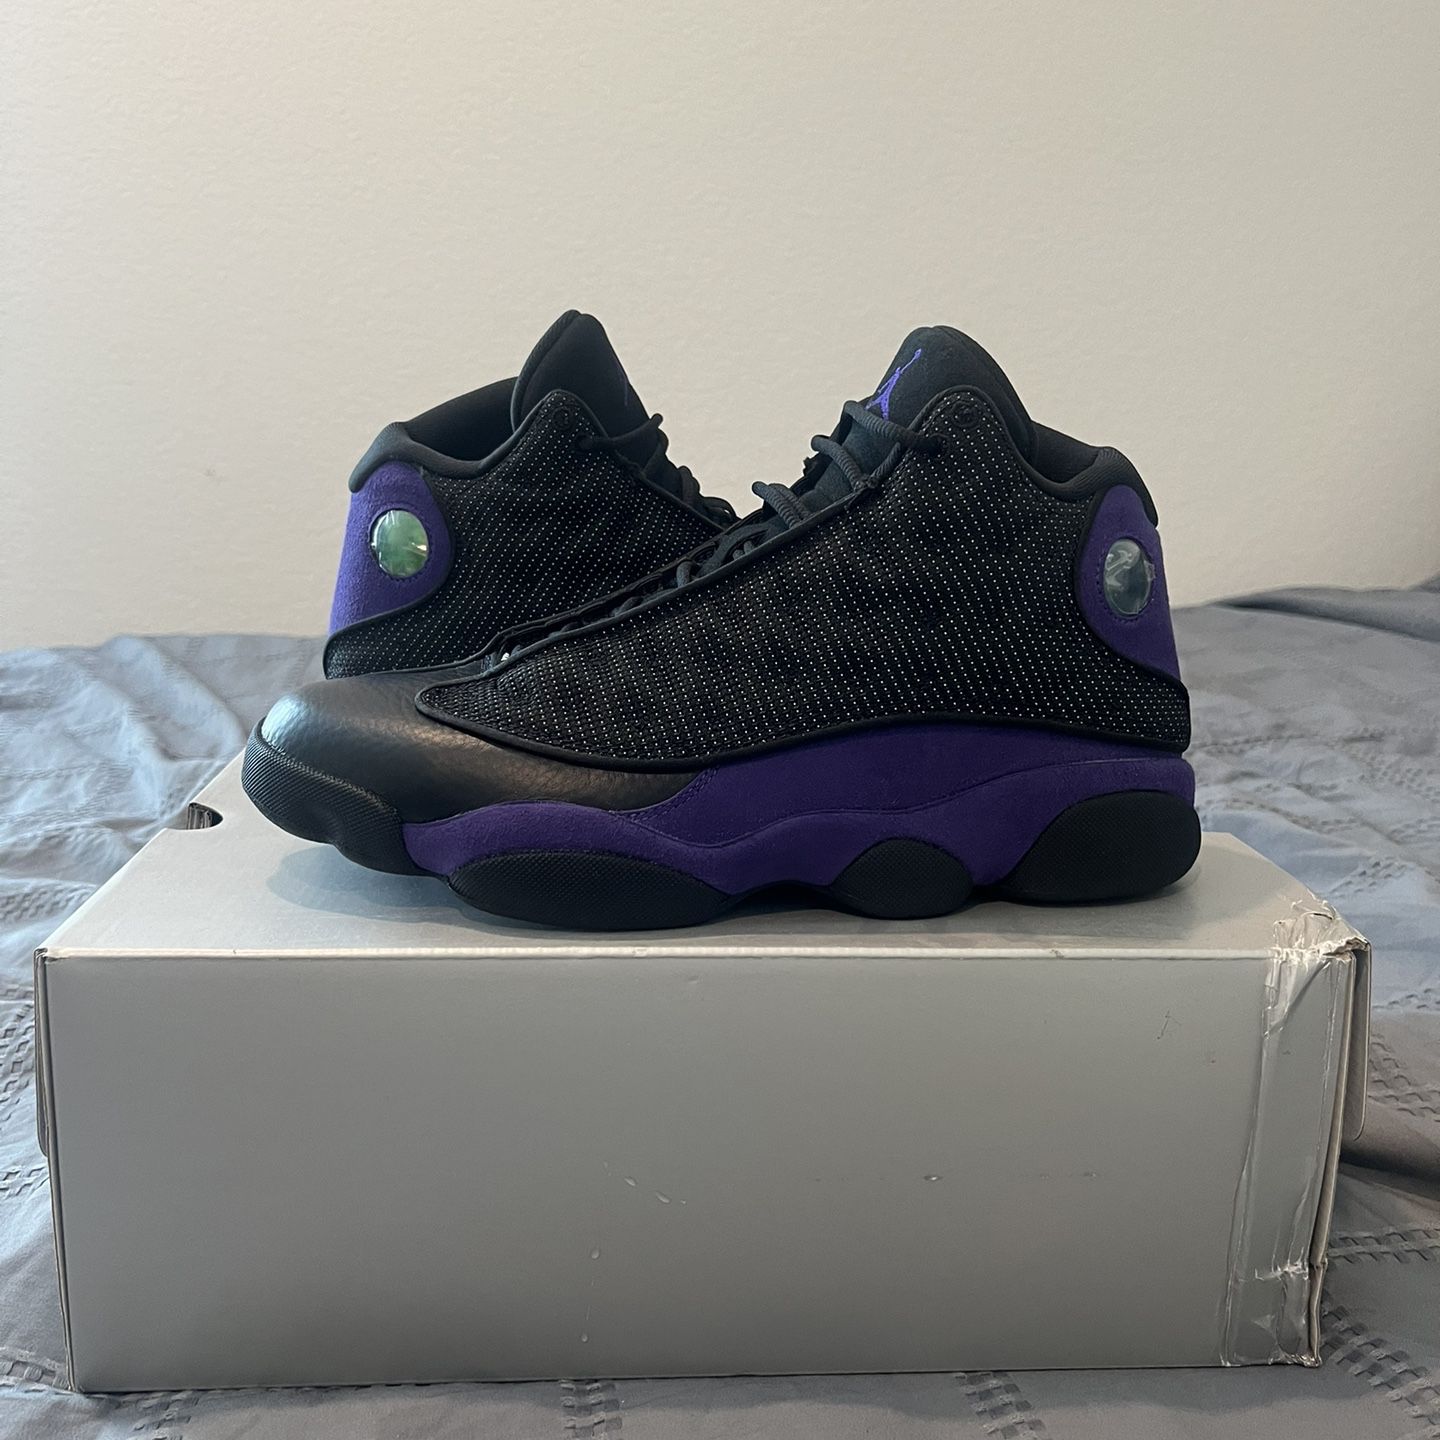 Jordan 13 “Court Purple”